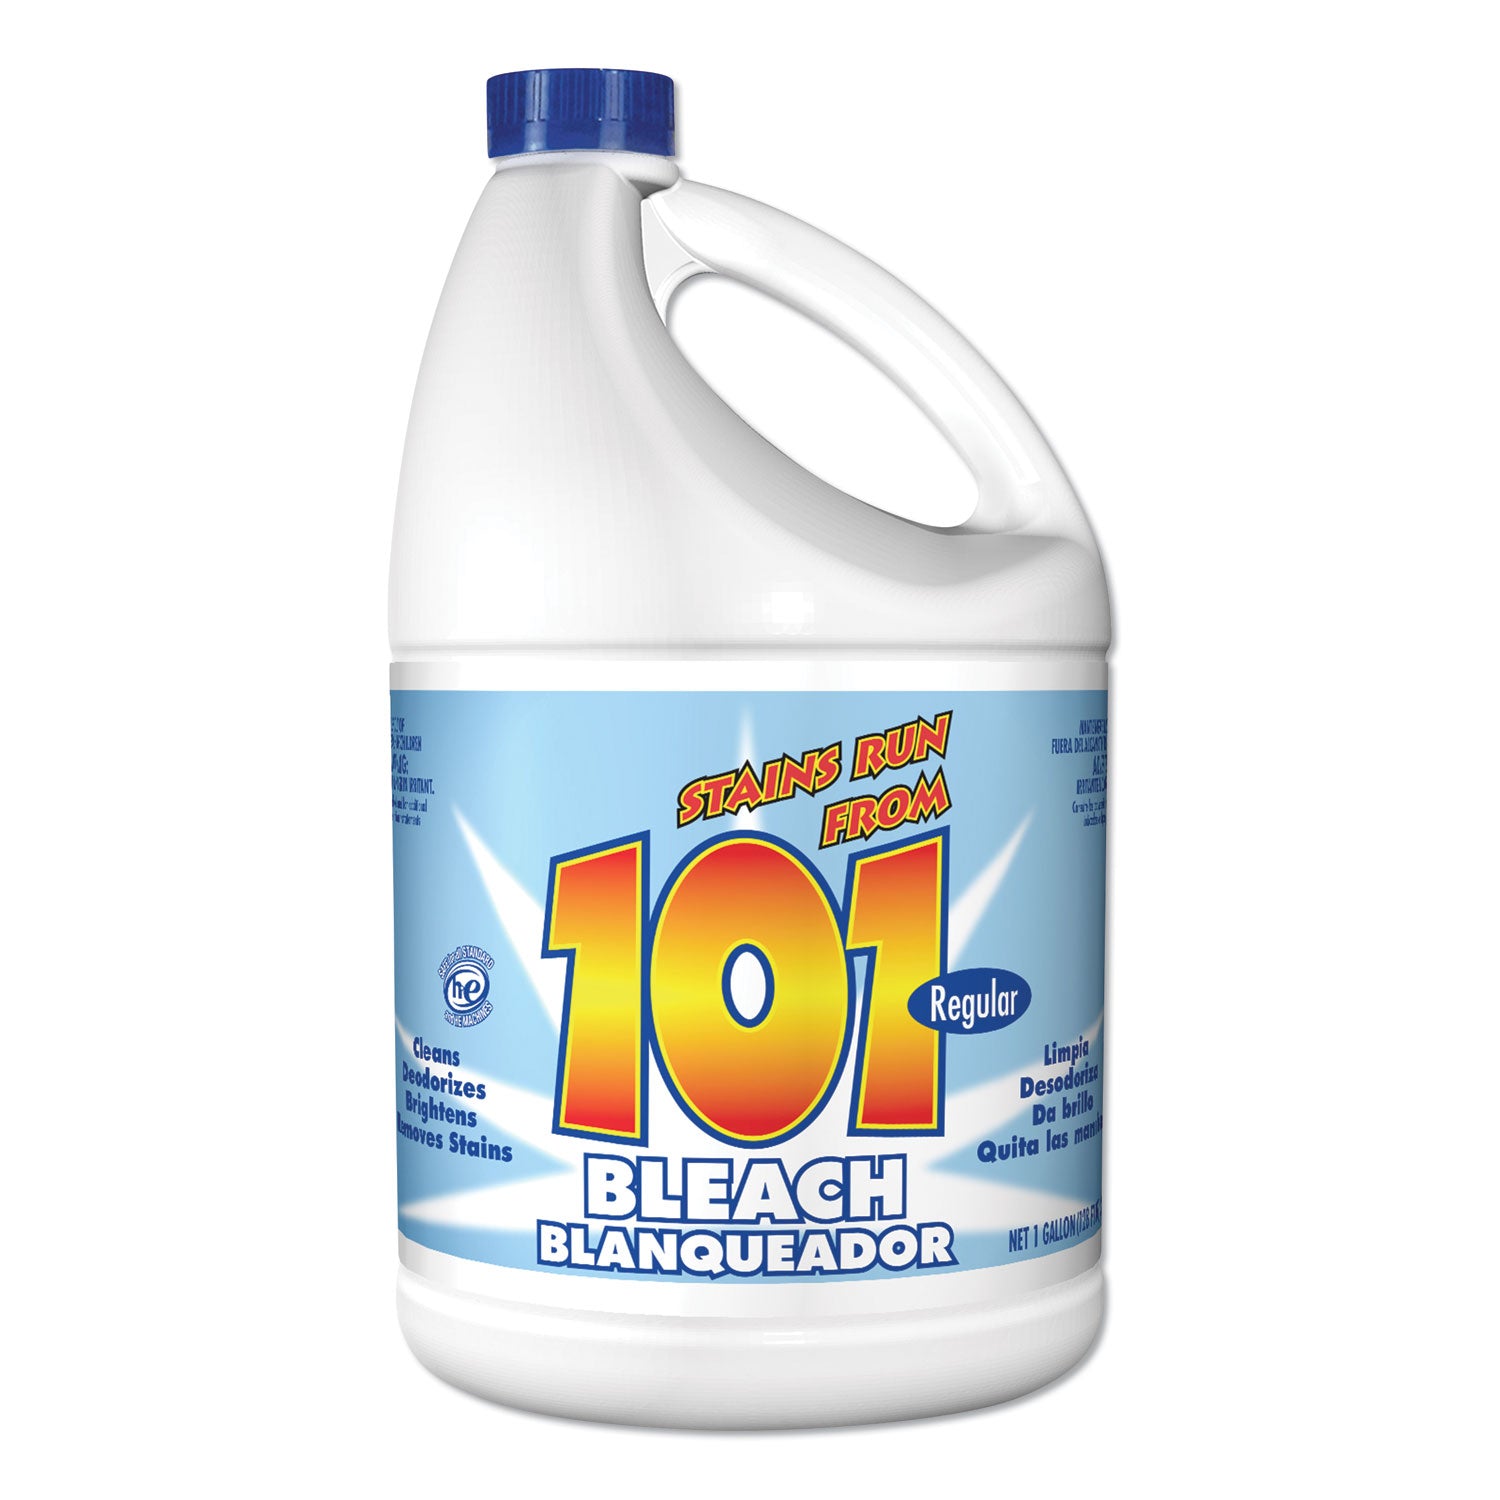 regular-cleaning-low-strength-bleach-1-gal-bottle-6-carton_kik11006755042 - 1